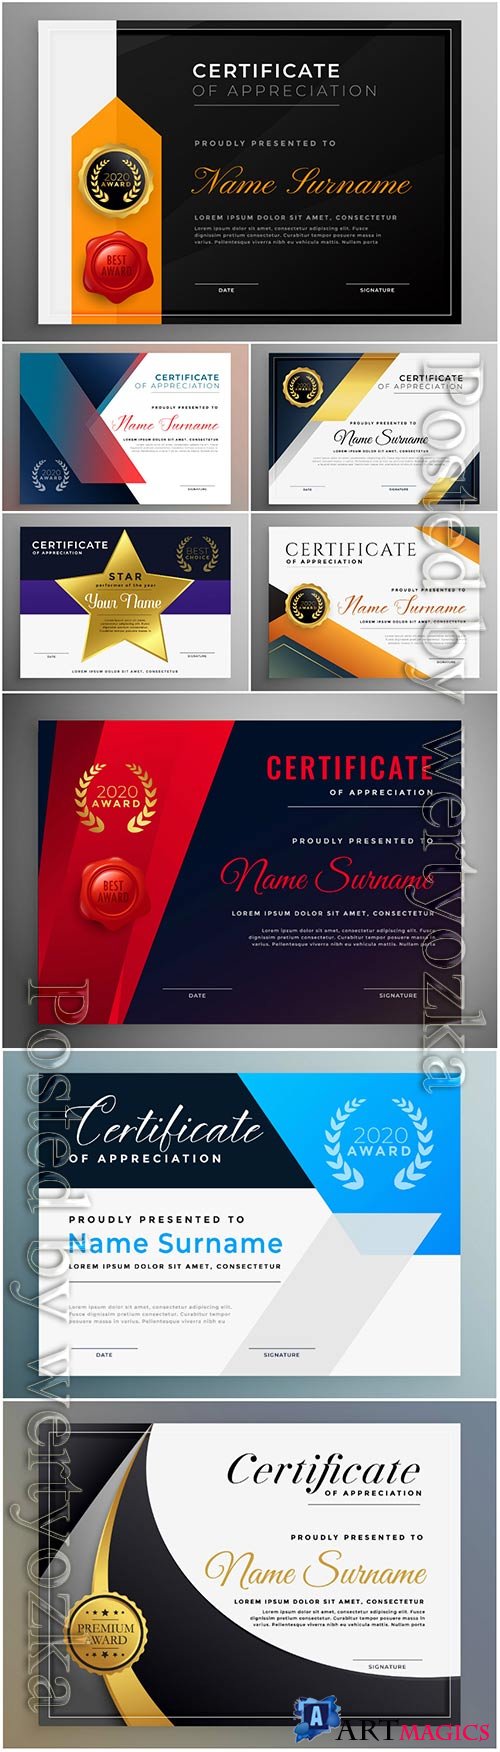 Certificate of appreciation professional vector template